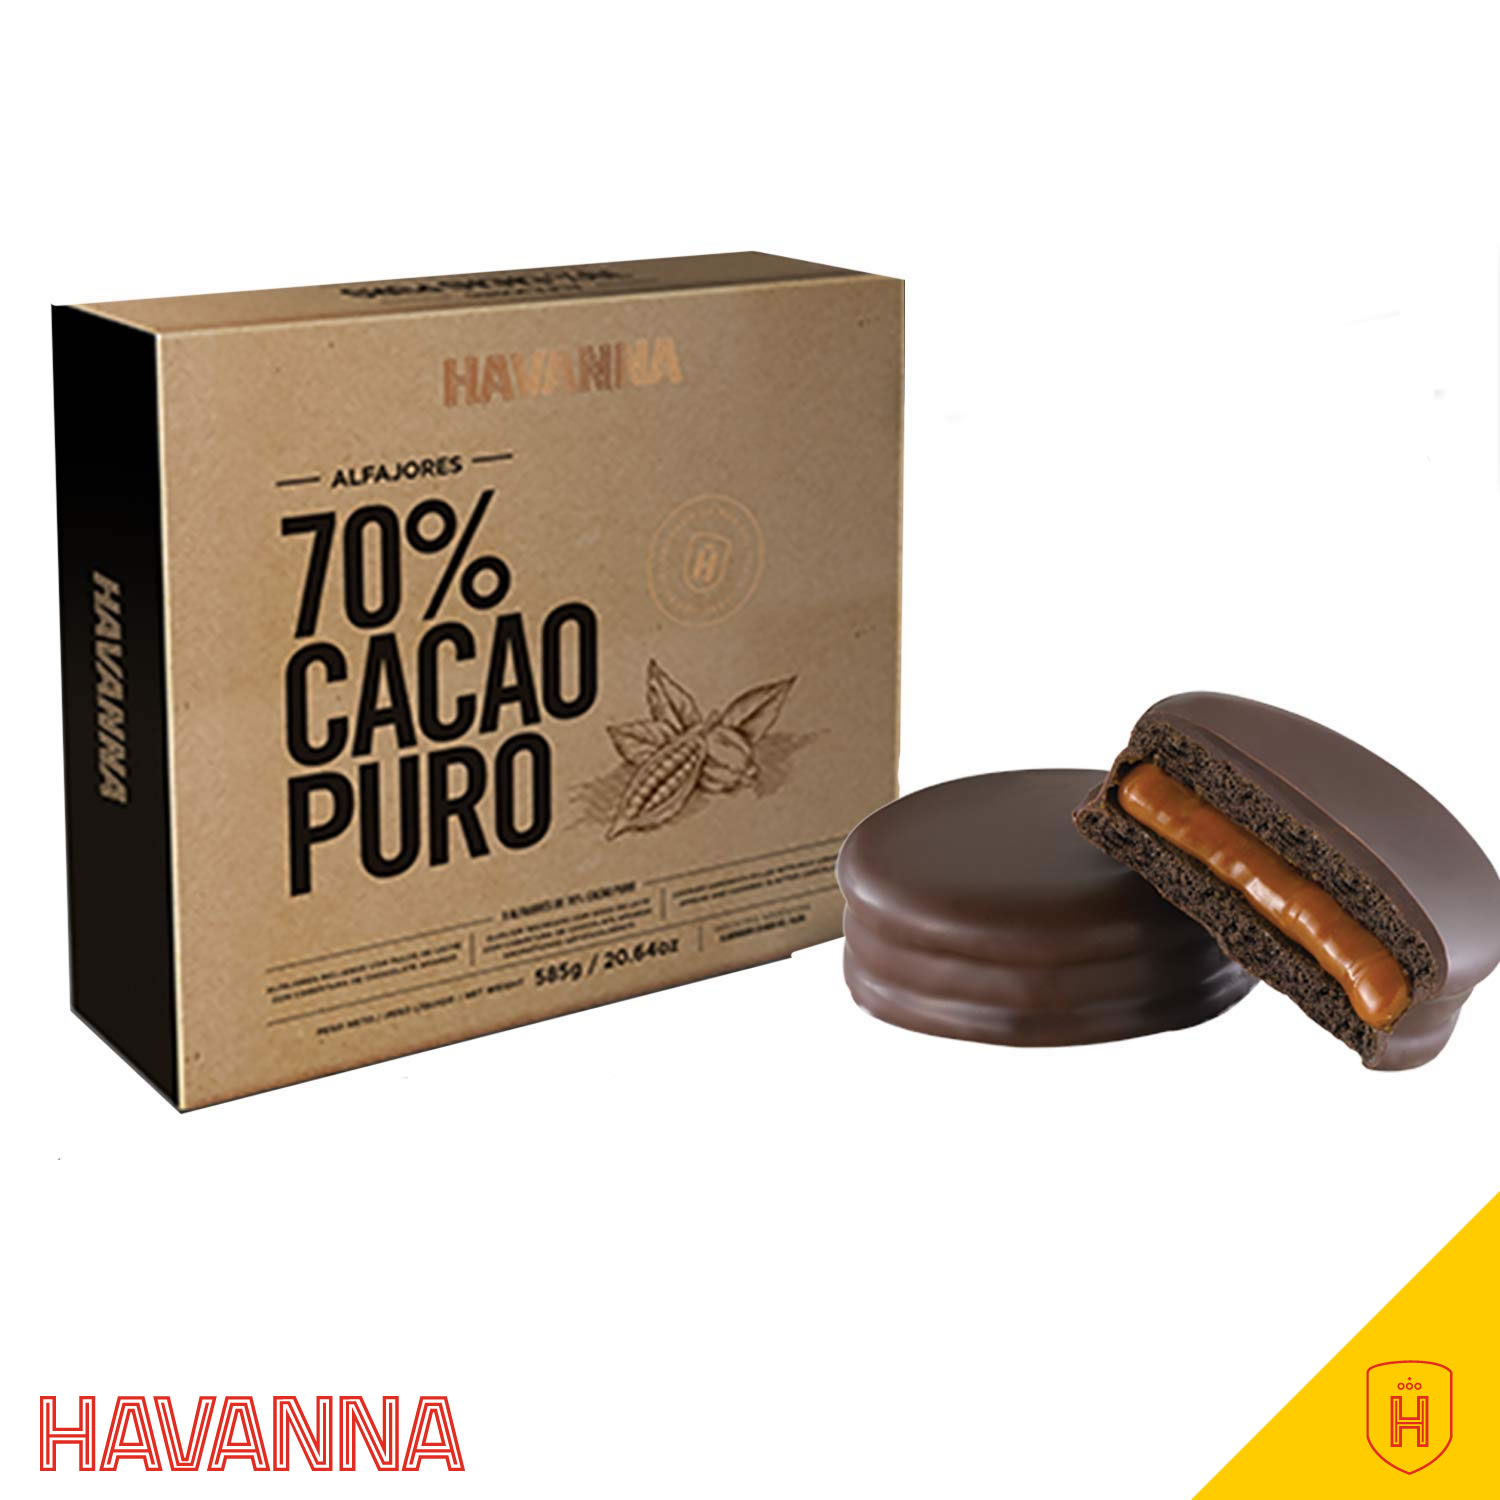 https://havannausa.com/wp-content/uploads/2019/12/Alfajor-Havanna-70-Cacao.jpg